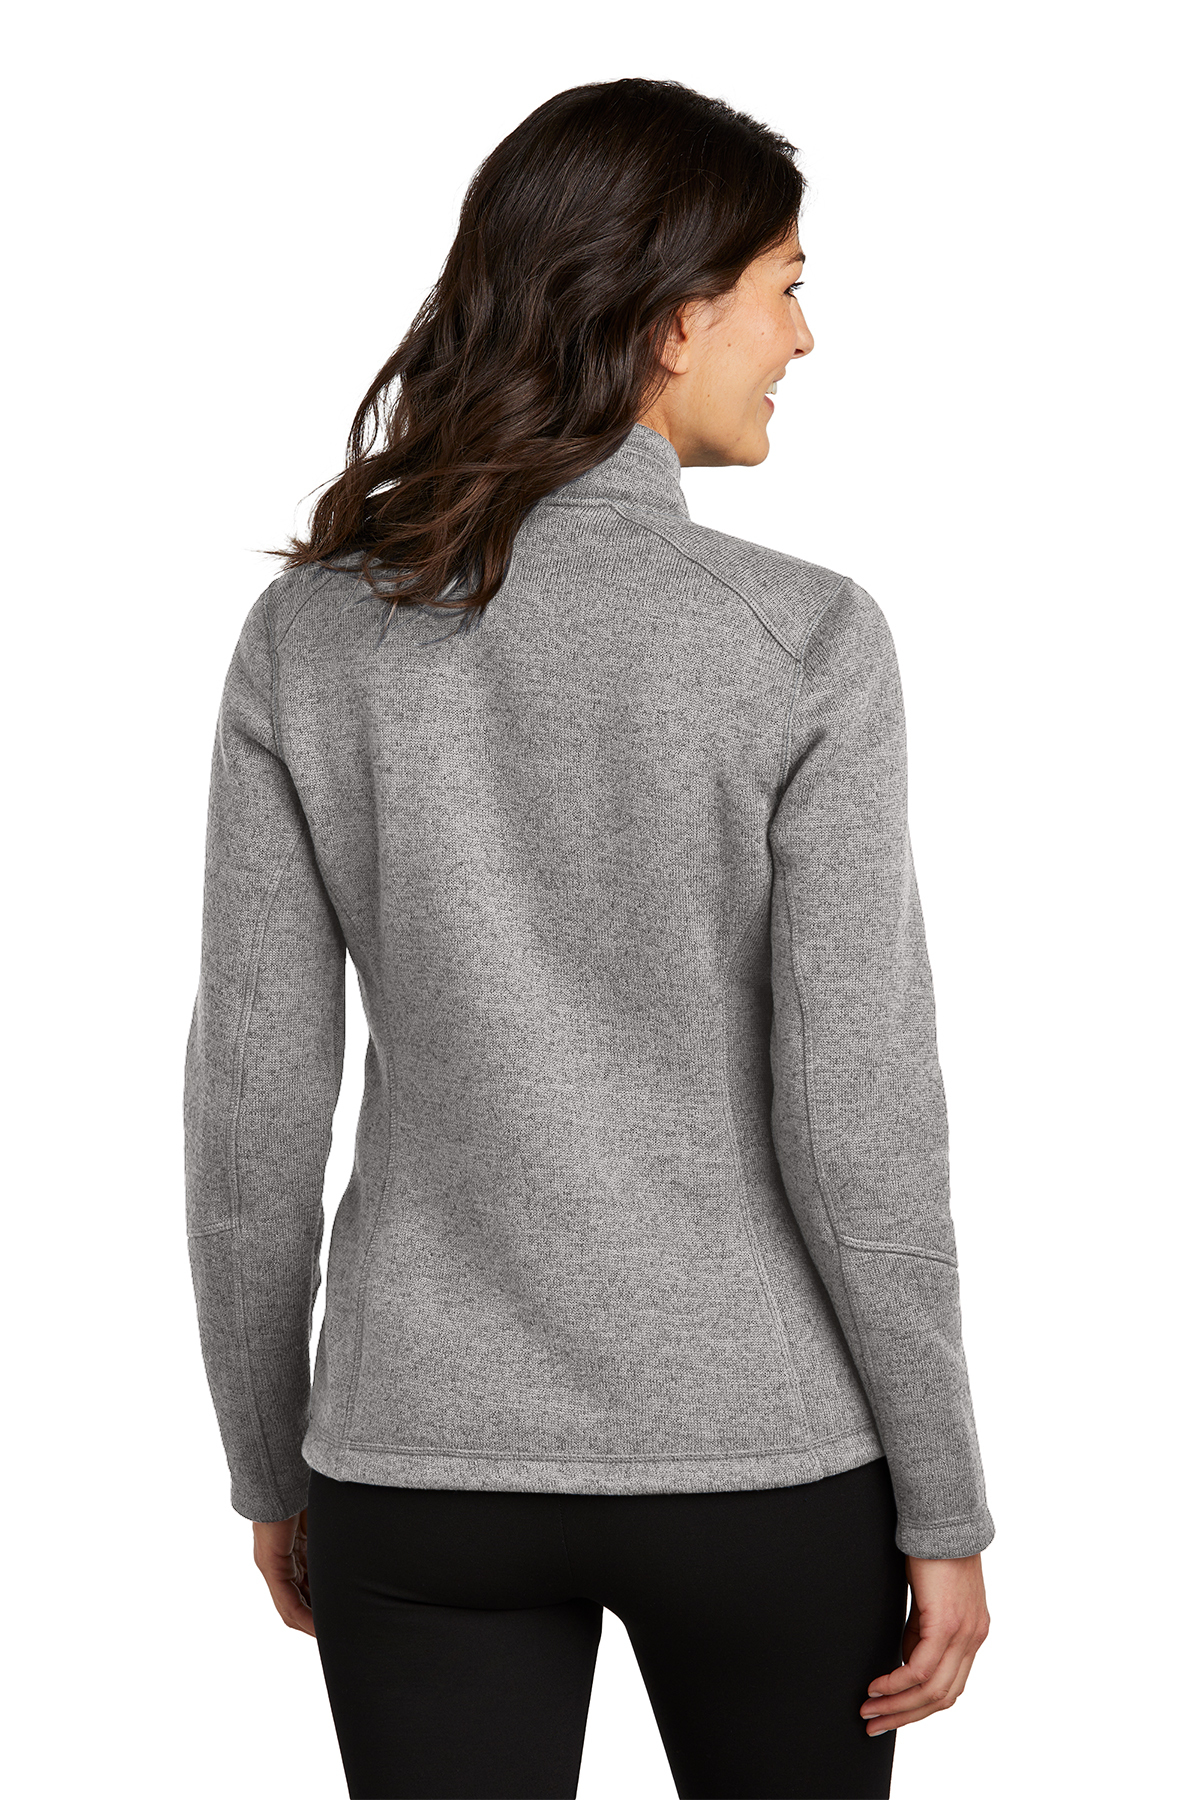 Port Authority® Ladies Arc Sweater Fleece Long Jacket L425 on Vimeo